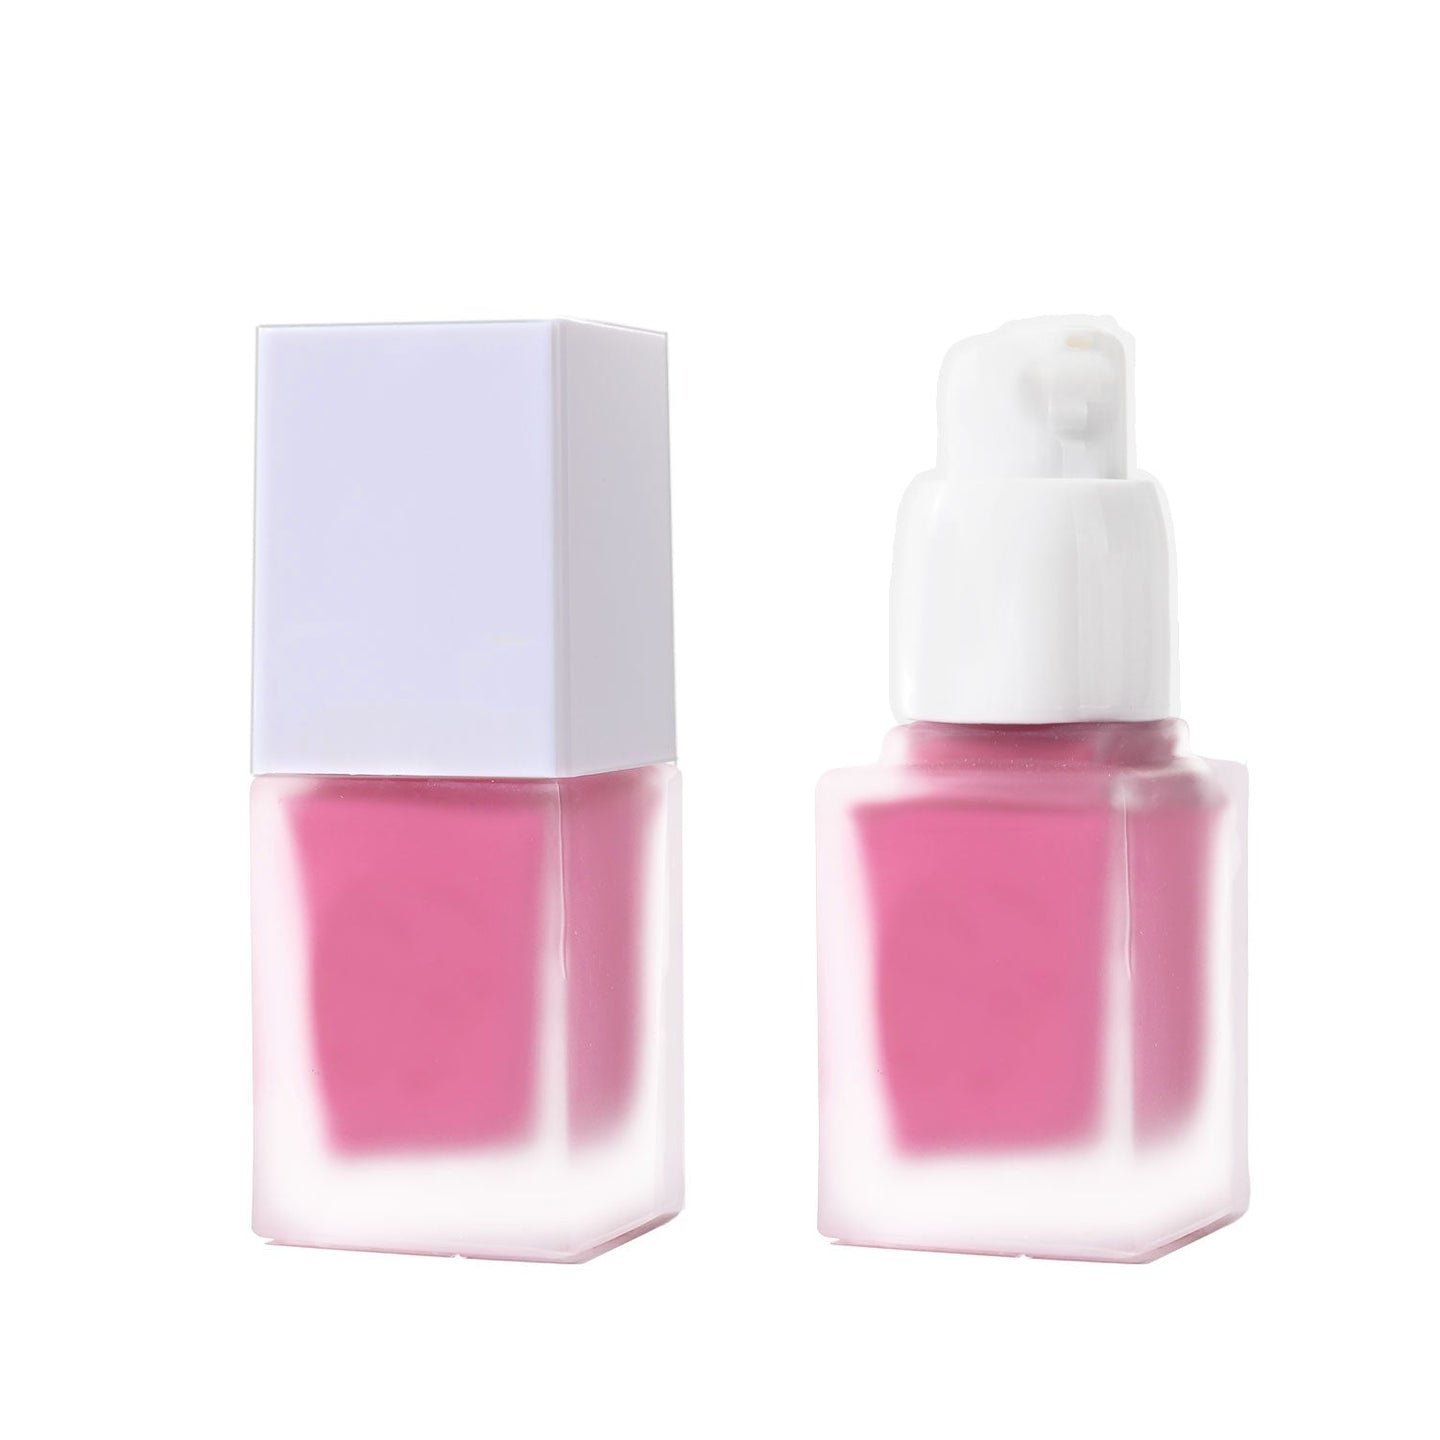 High-pigmented Long Lasting Liquid Blush Sampler Kit